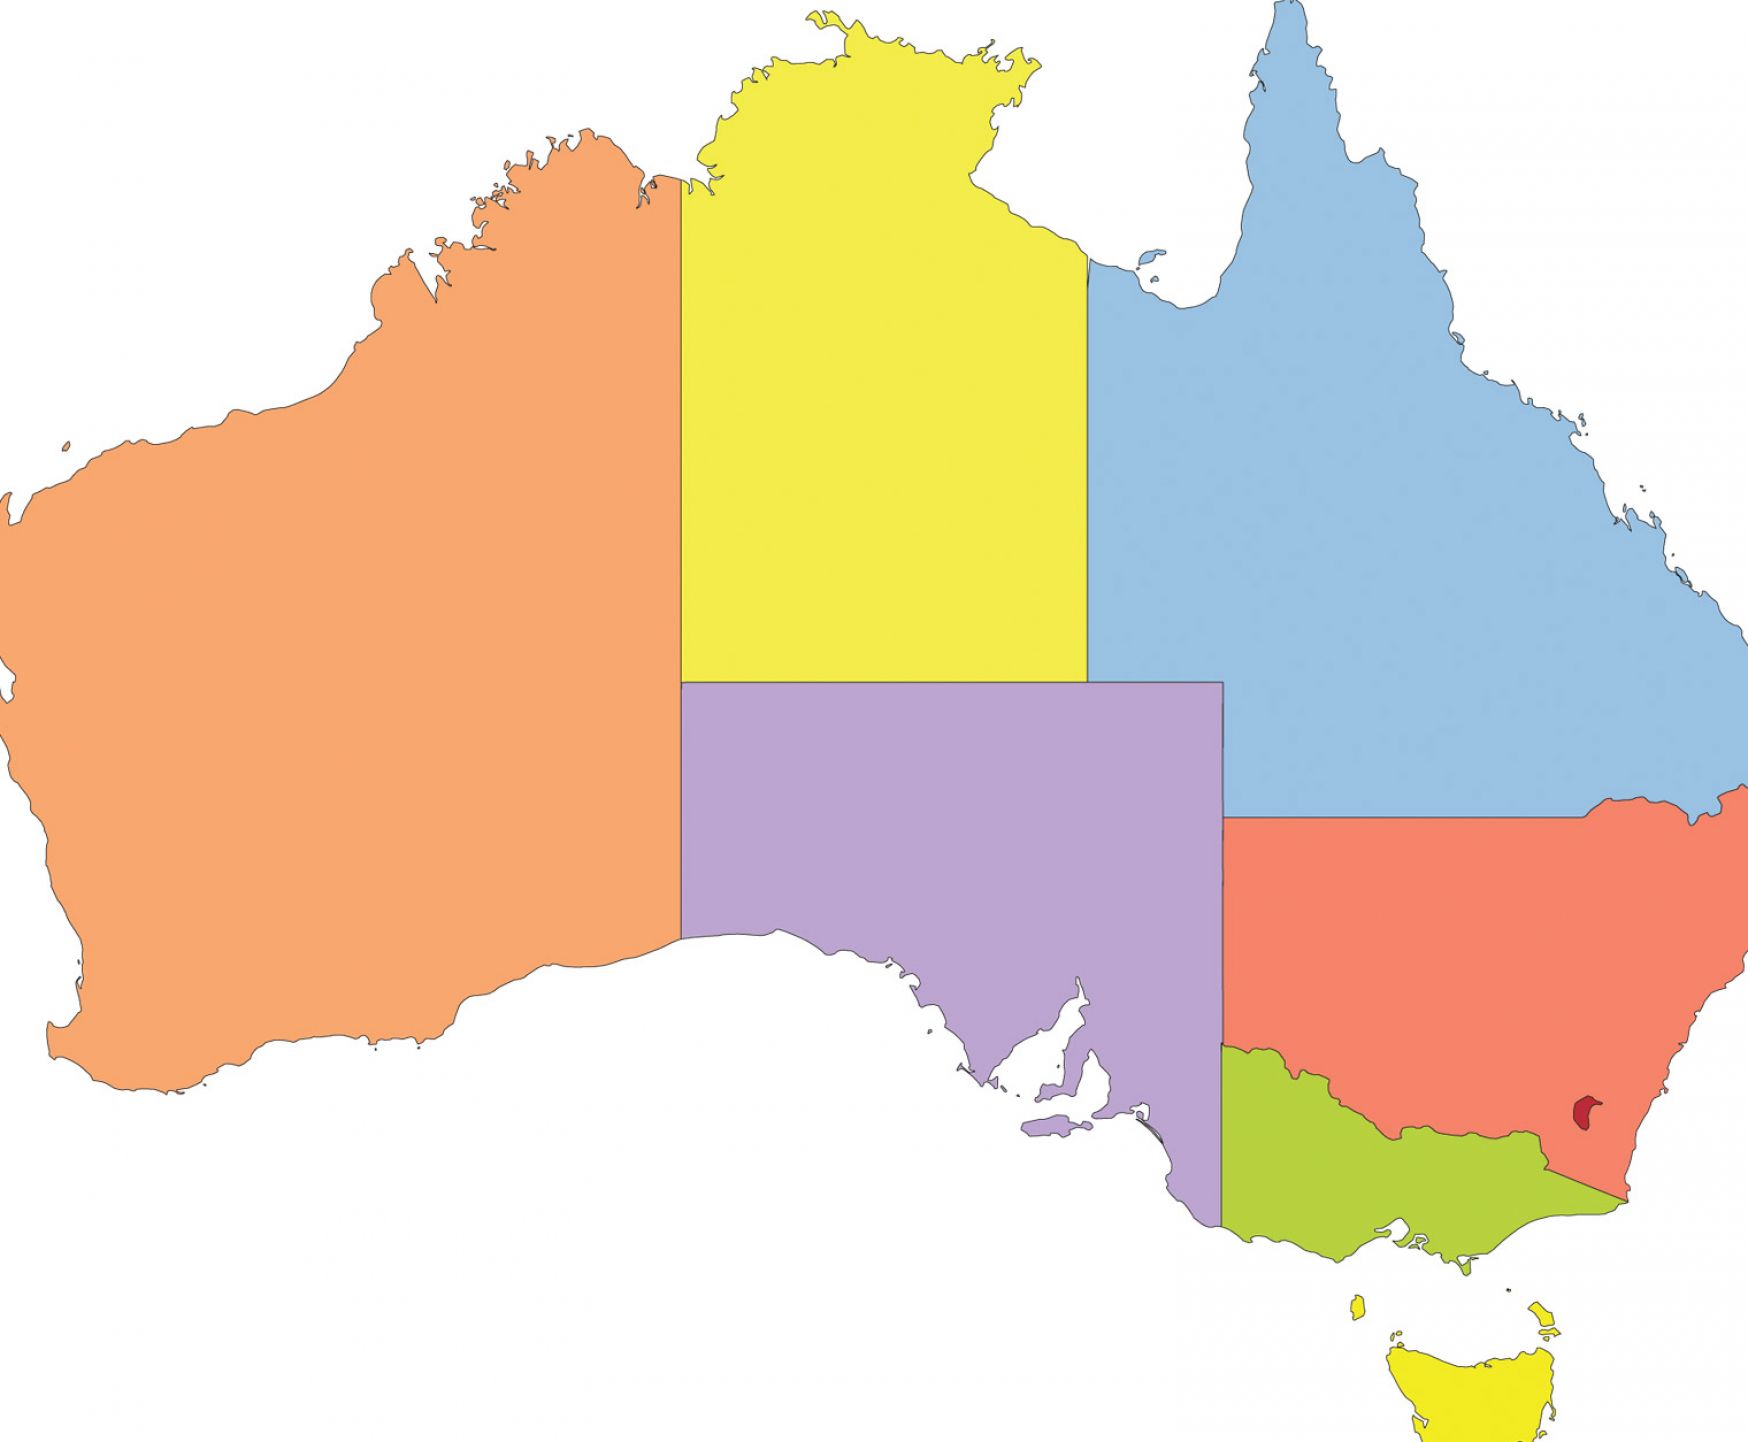 Australia Printable Map 3x5 Australia Blank Map Select From 3